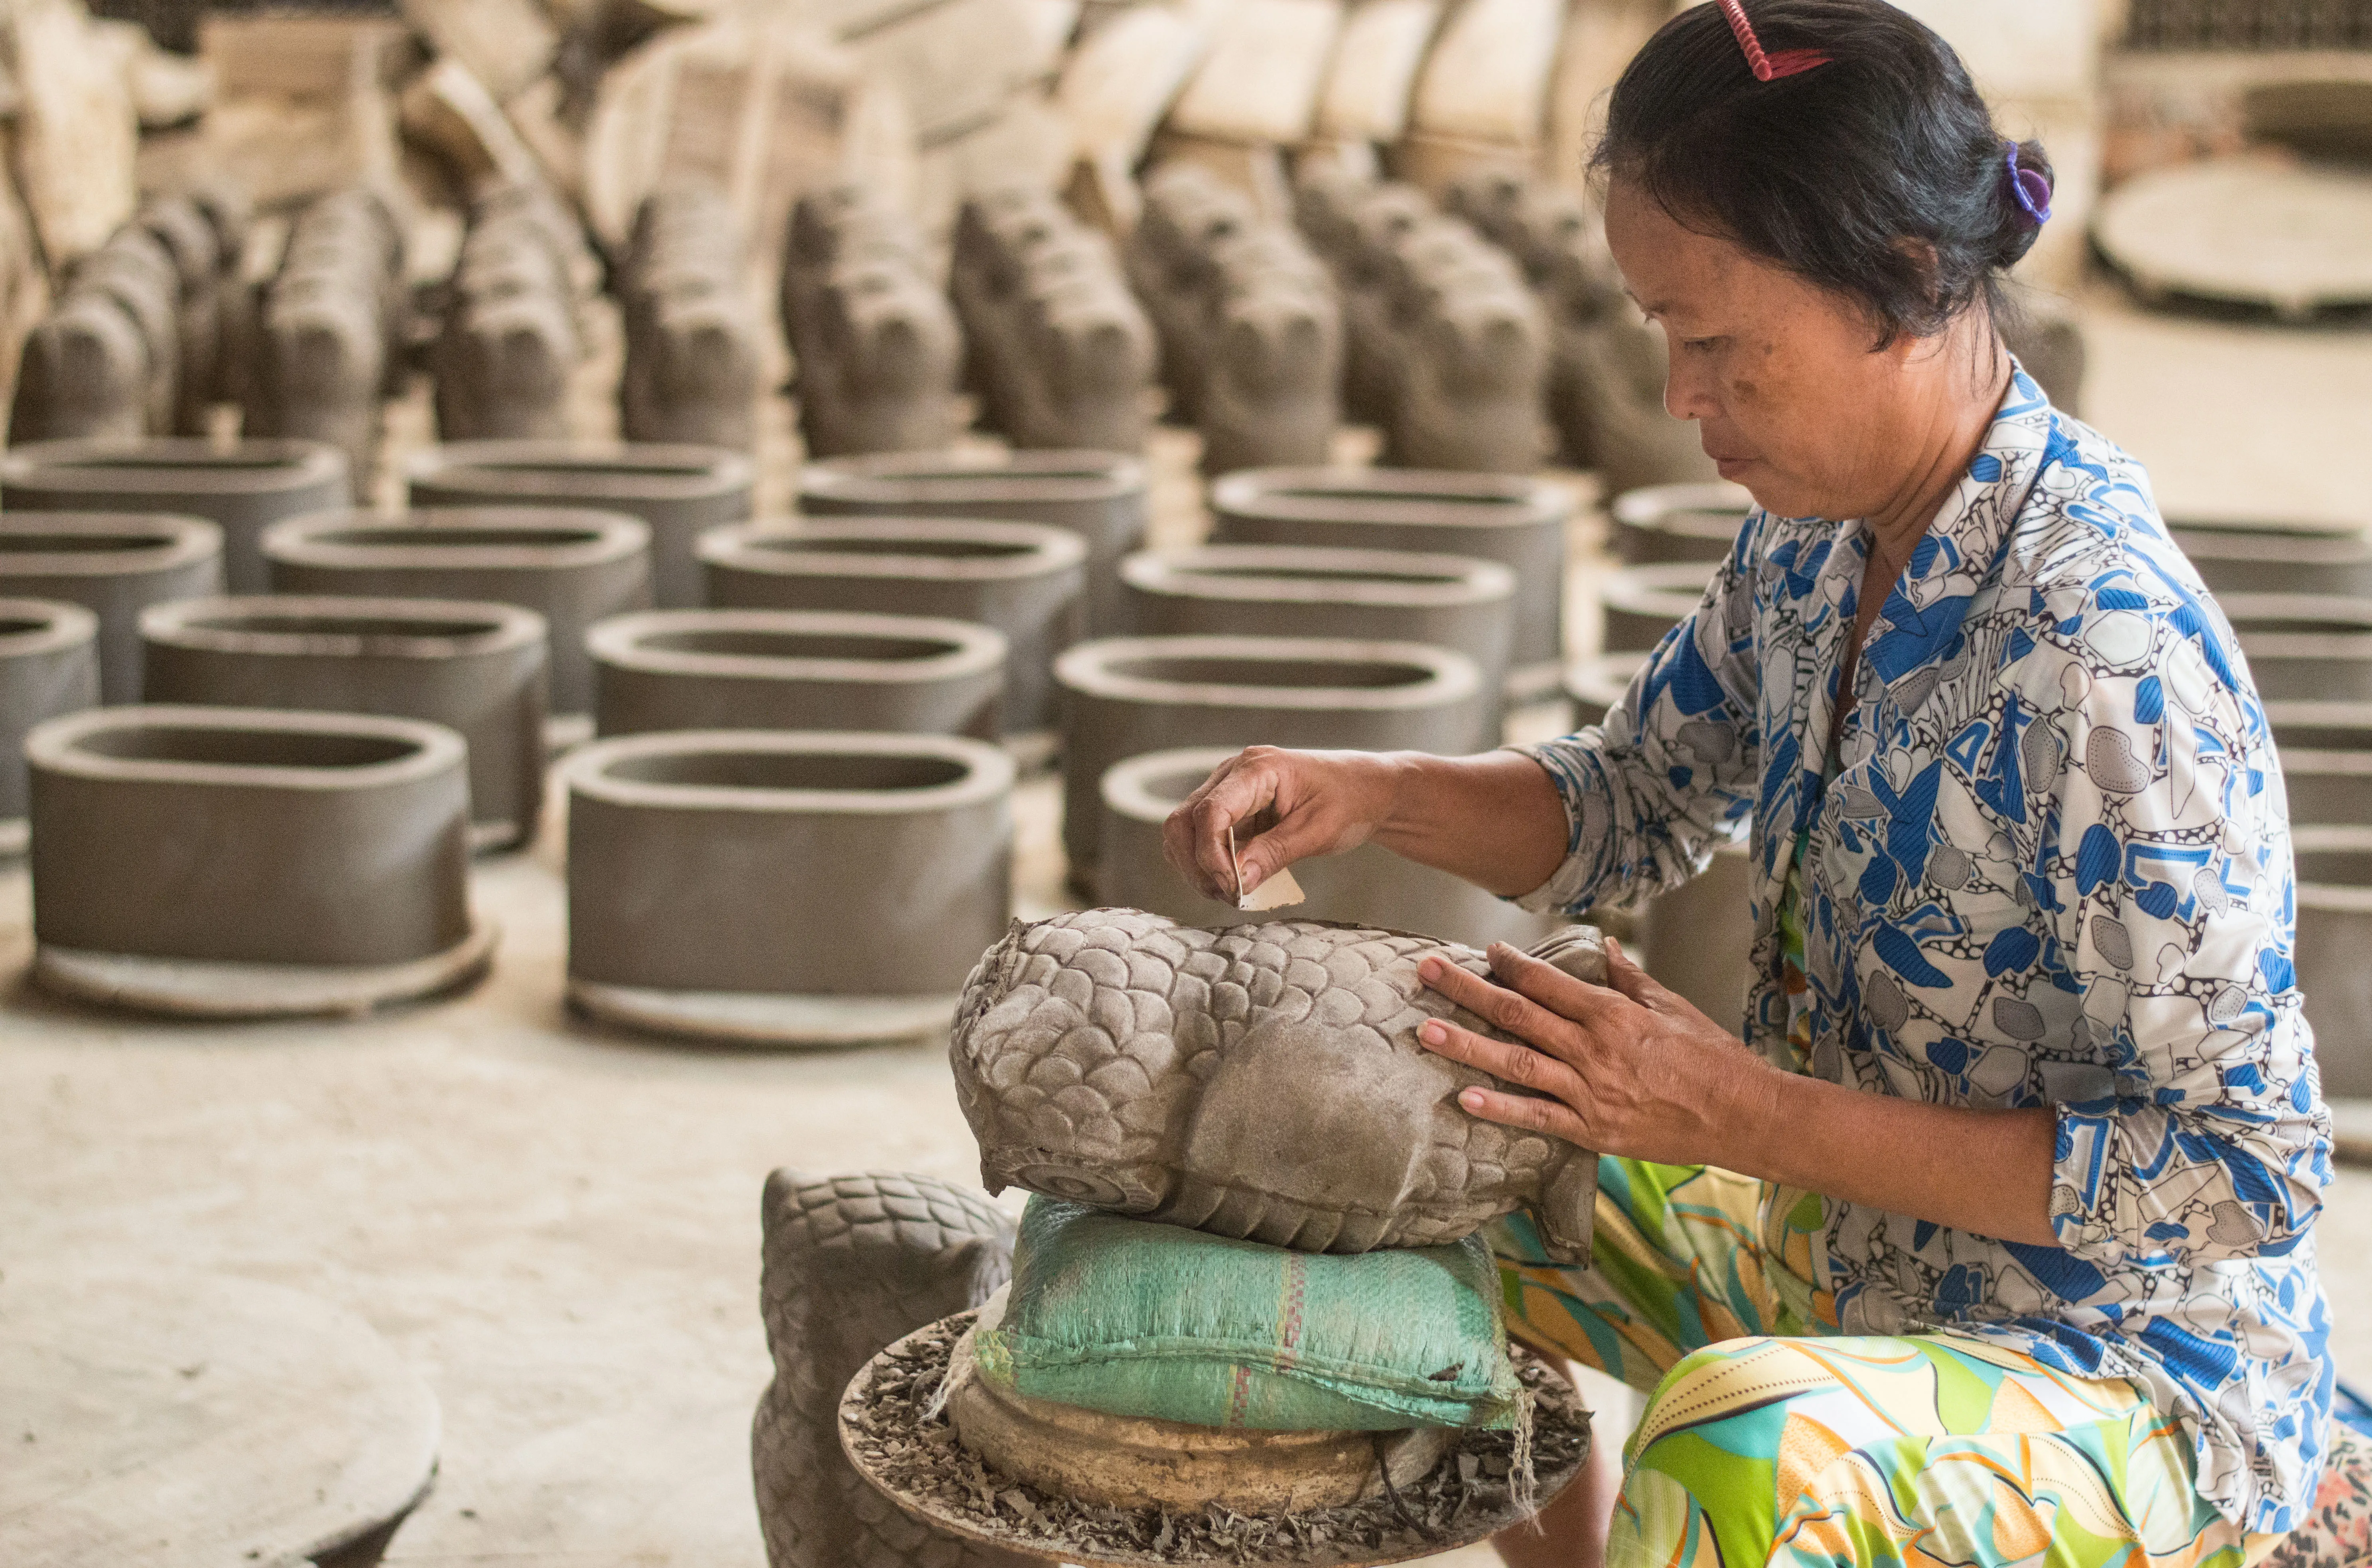 Atelier de sculpture en argile au Cambodge 